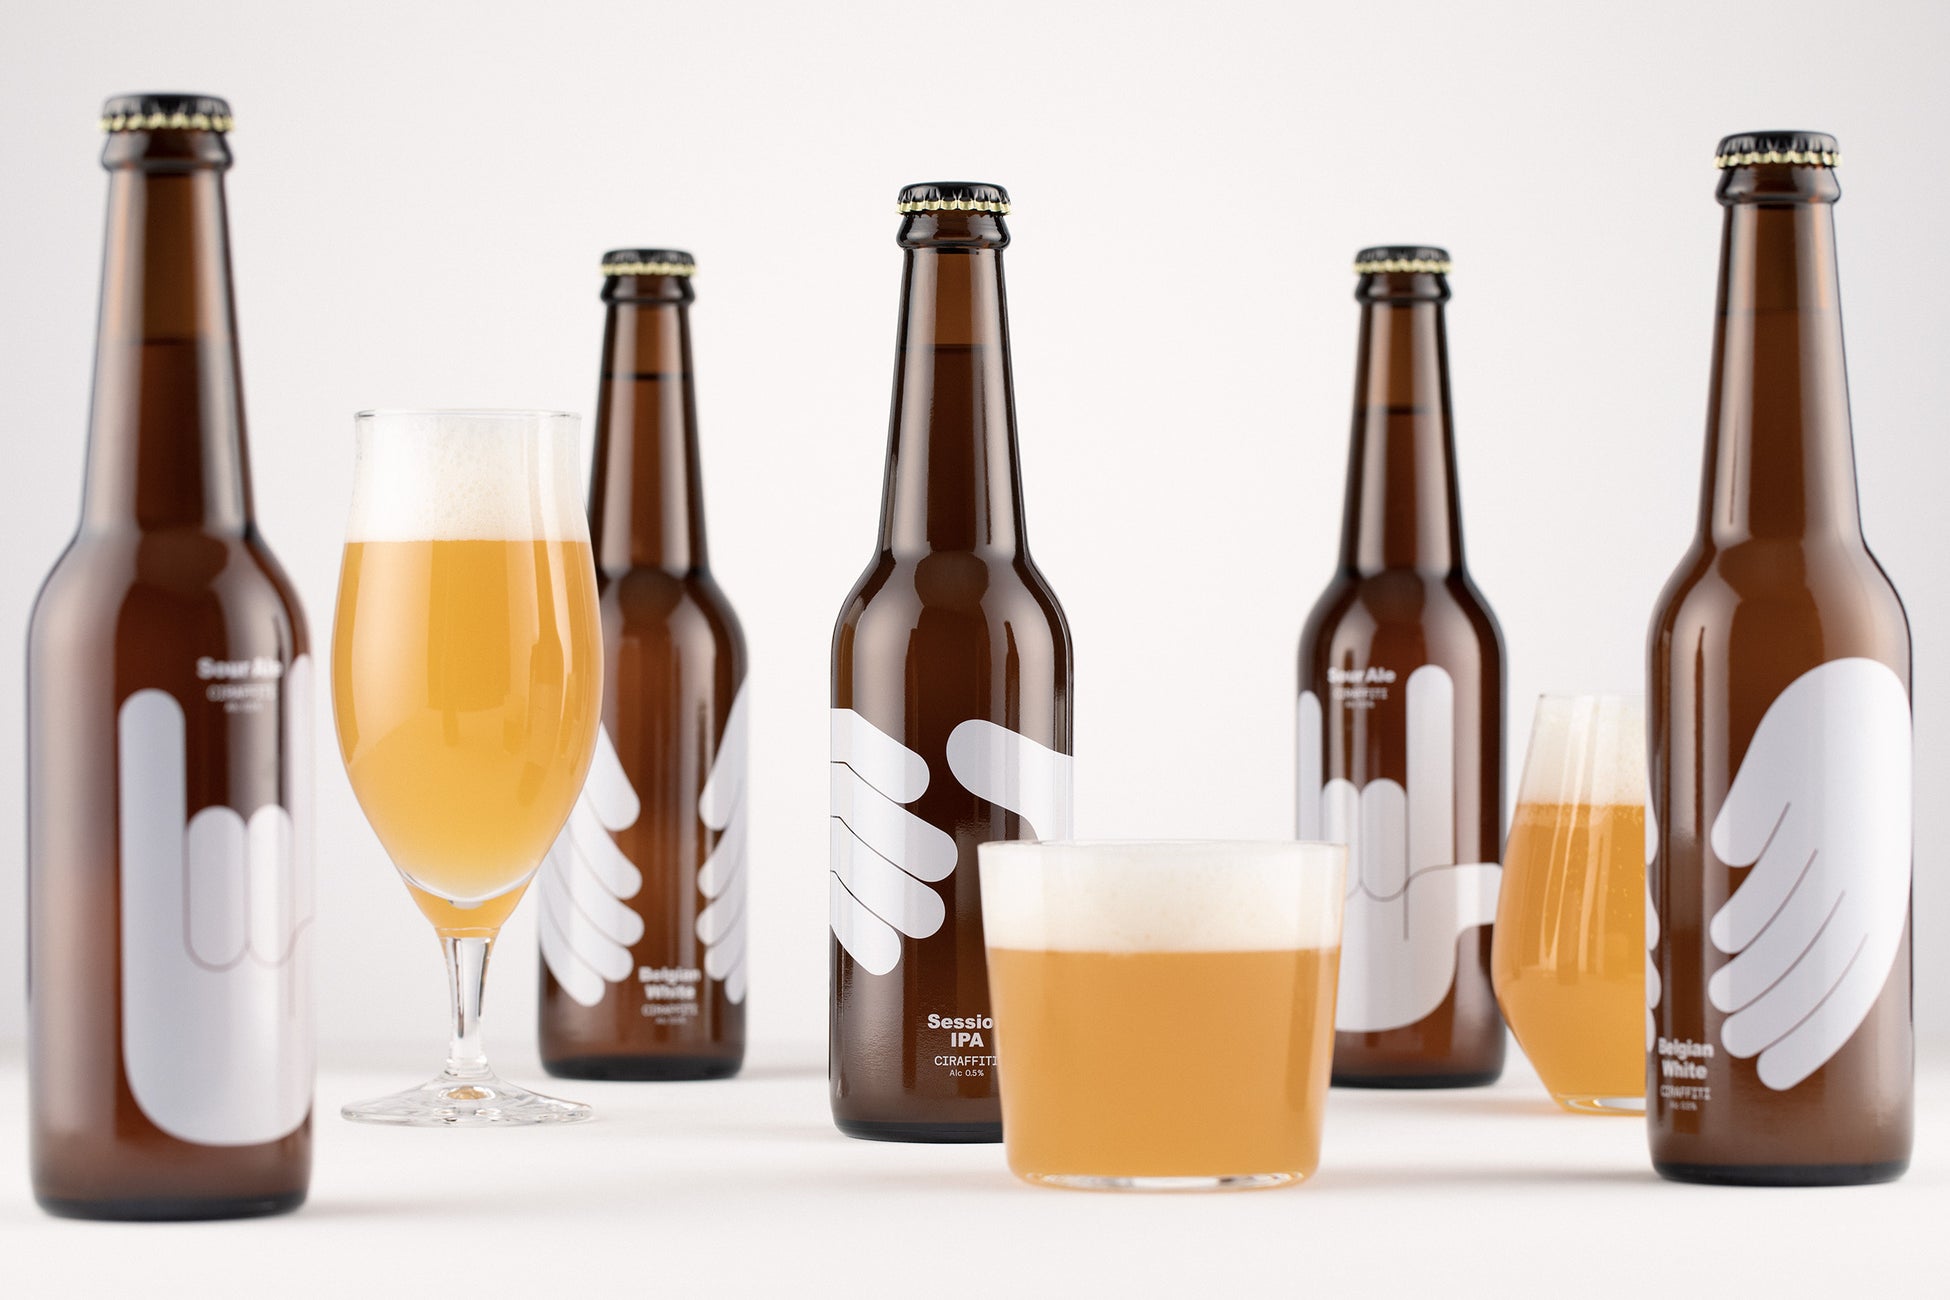 Beverich、ノンアル・ローアルクラフトビールブランド「CIRAFFITI（シラフィティ）」を販売開始のサブ画像1